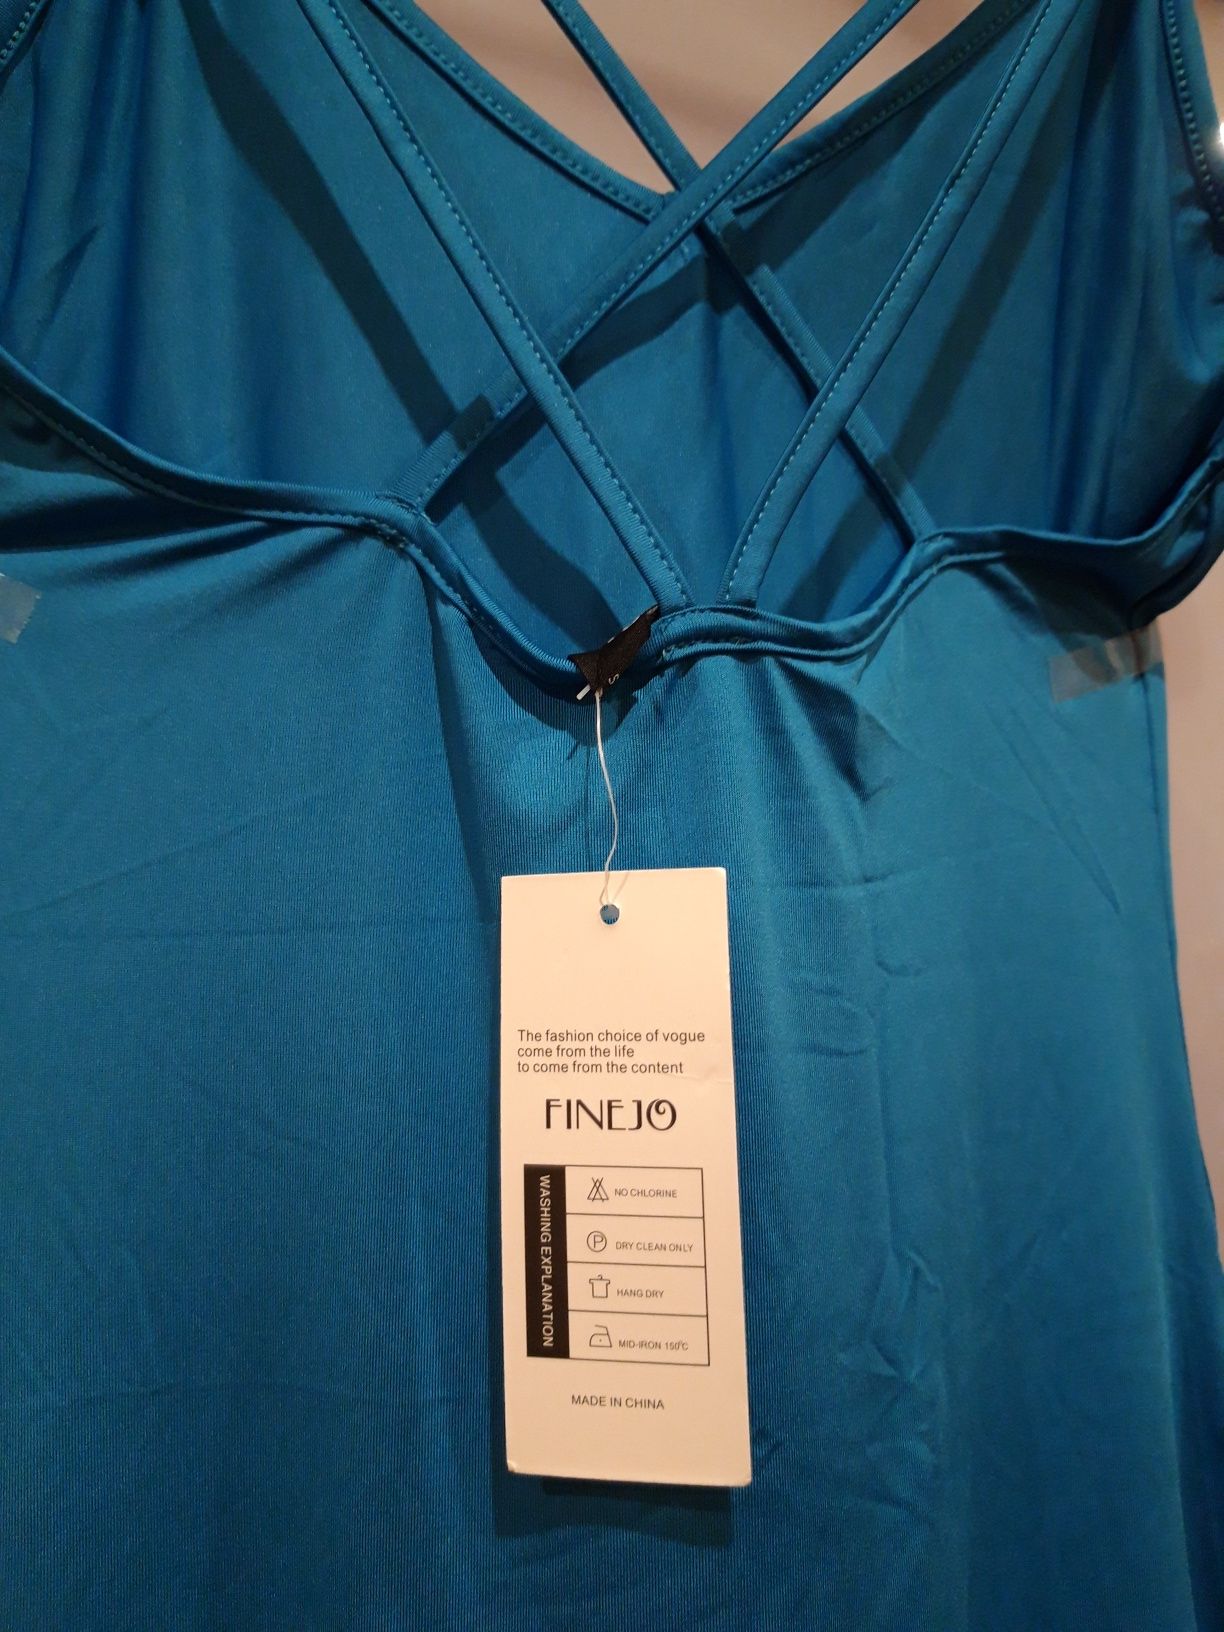 Camisa de noite (vestido) de cor azul, debruada a renda (S) - NOVA!